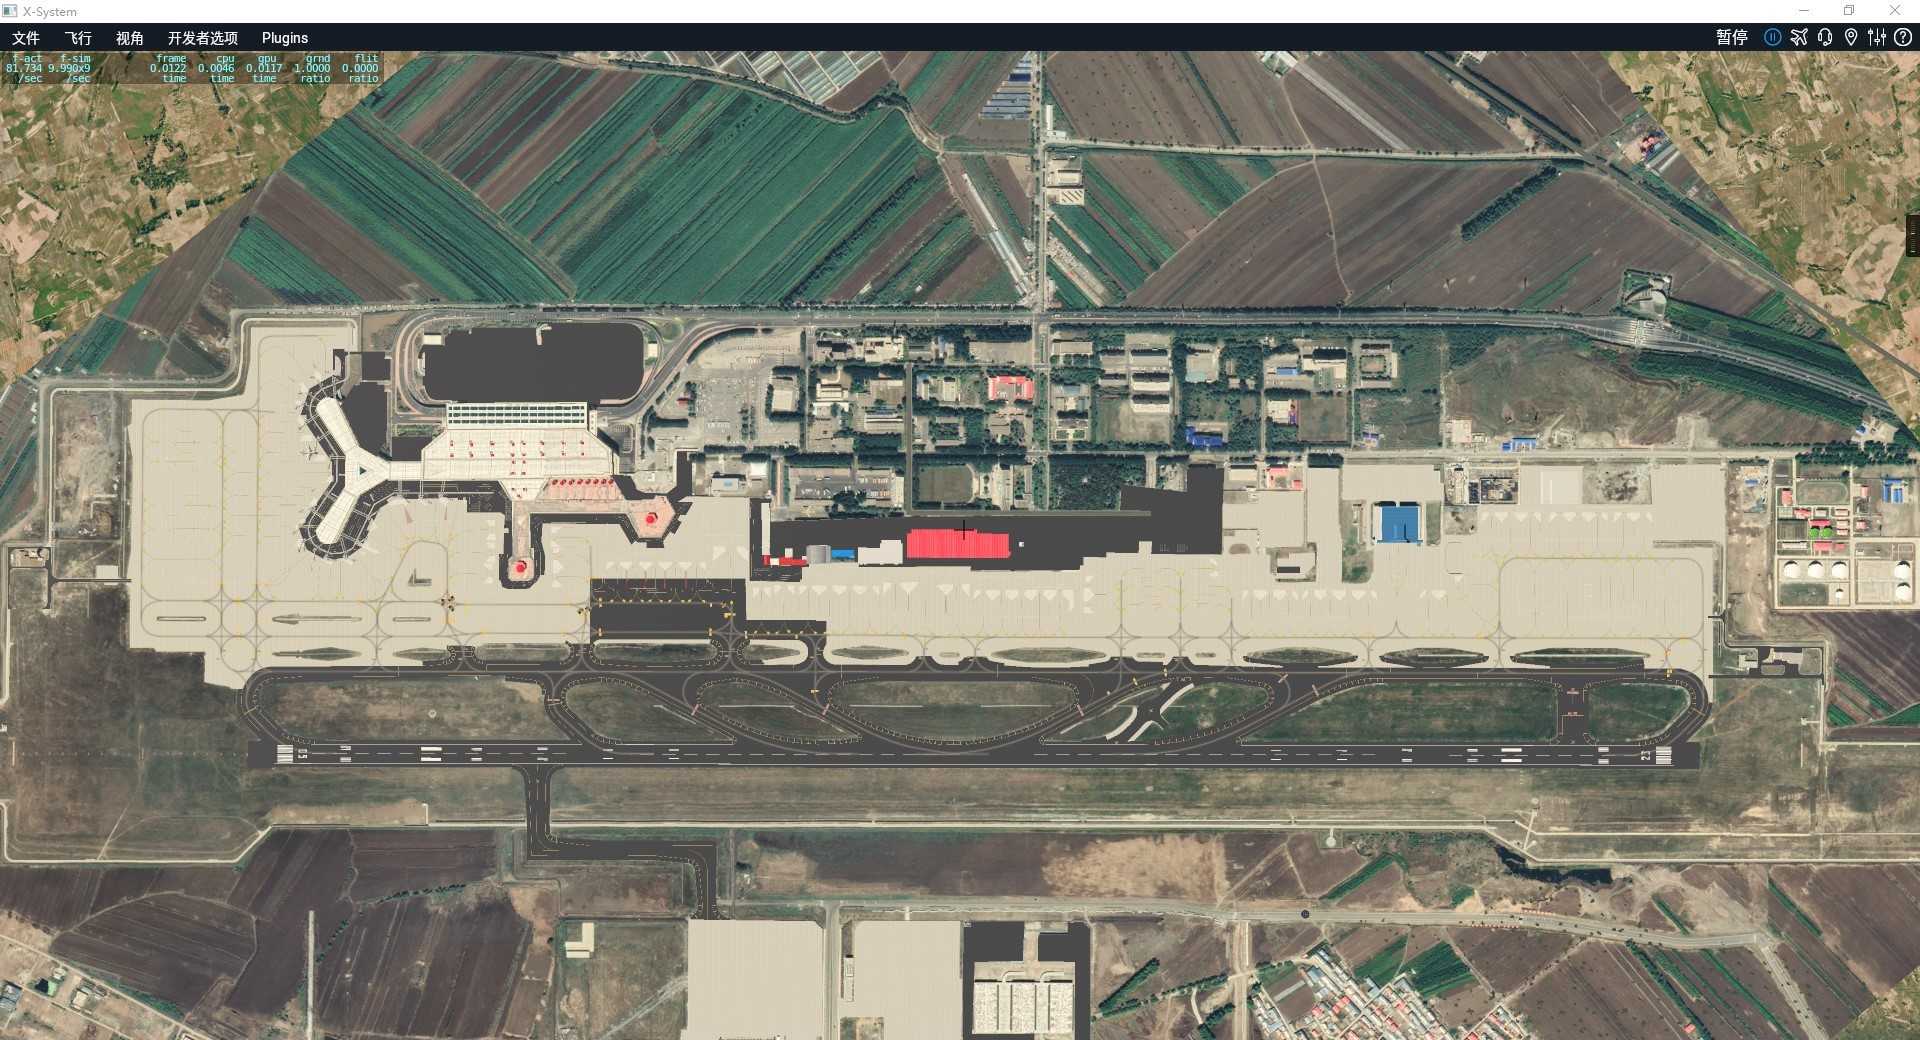 XP11哈尔滨机场地景V2.0制作Log-5 &amp; 为新地景开发组征名-3321 